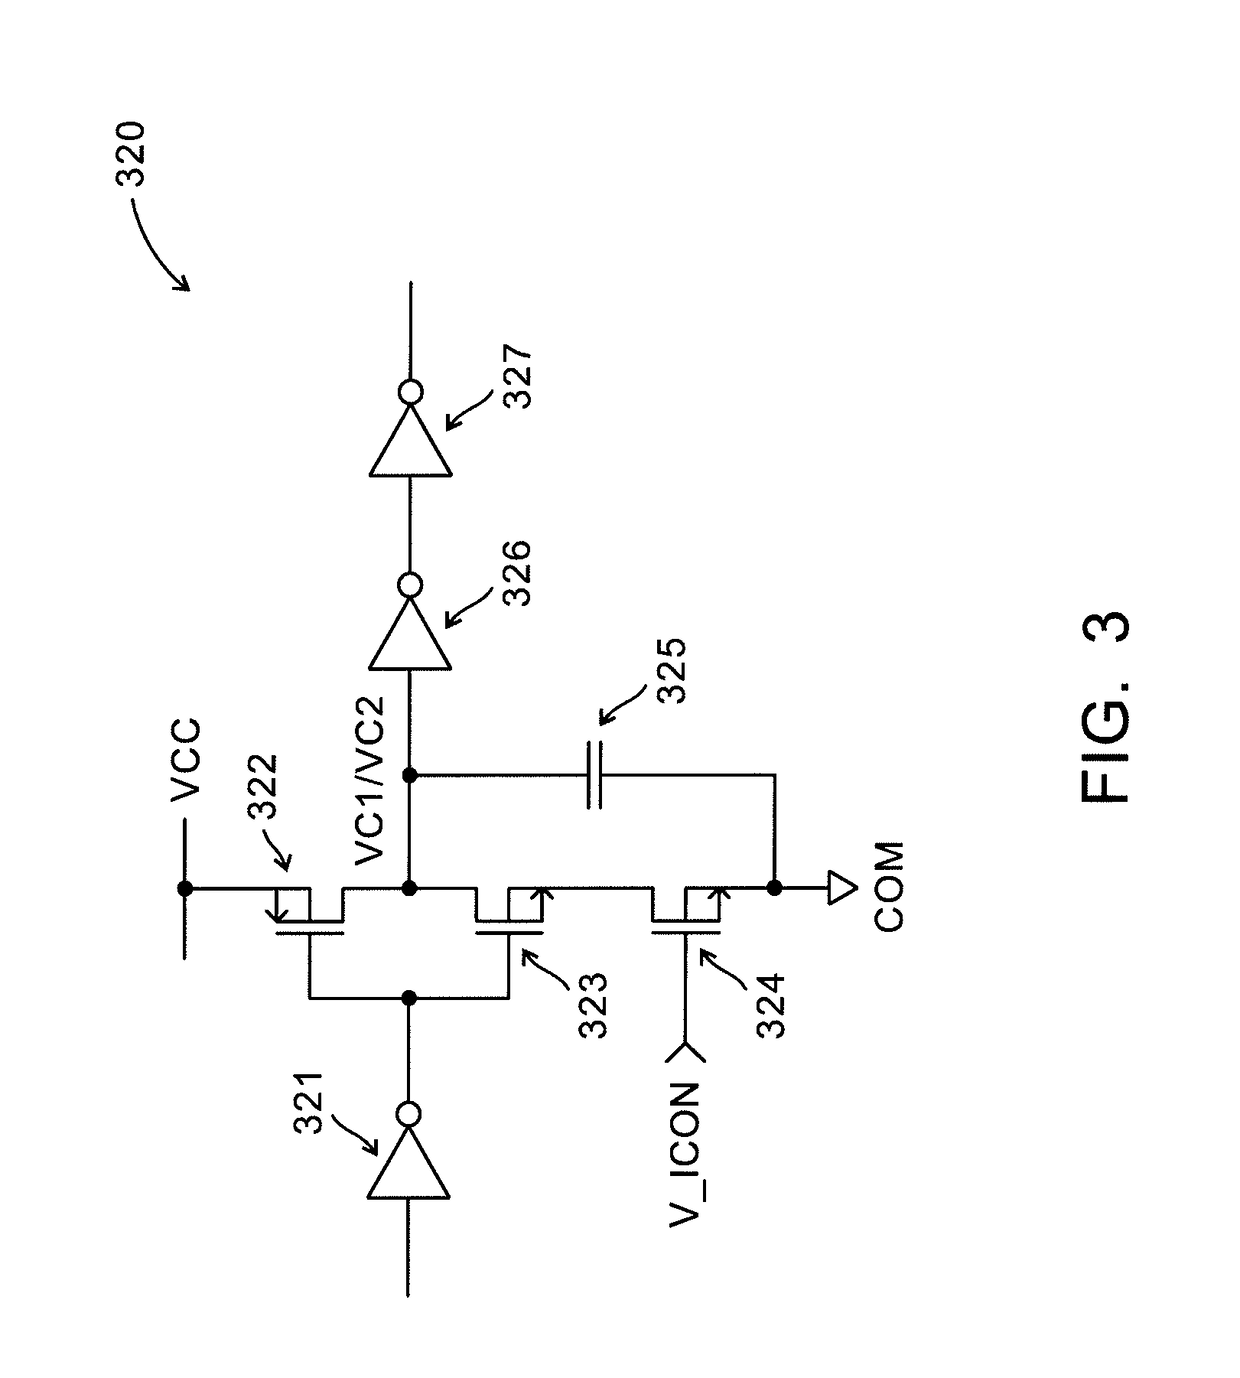 Pulse width filtering circuit